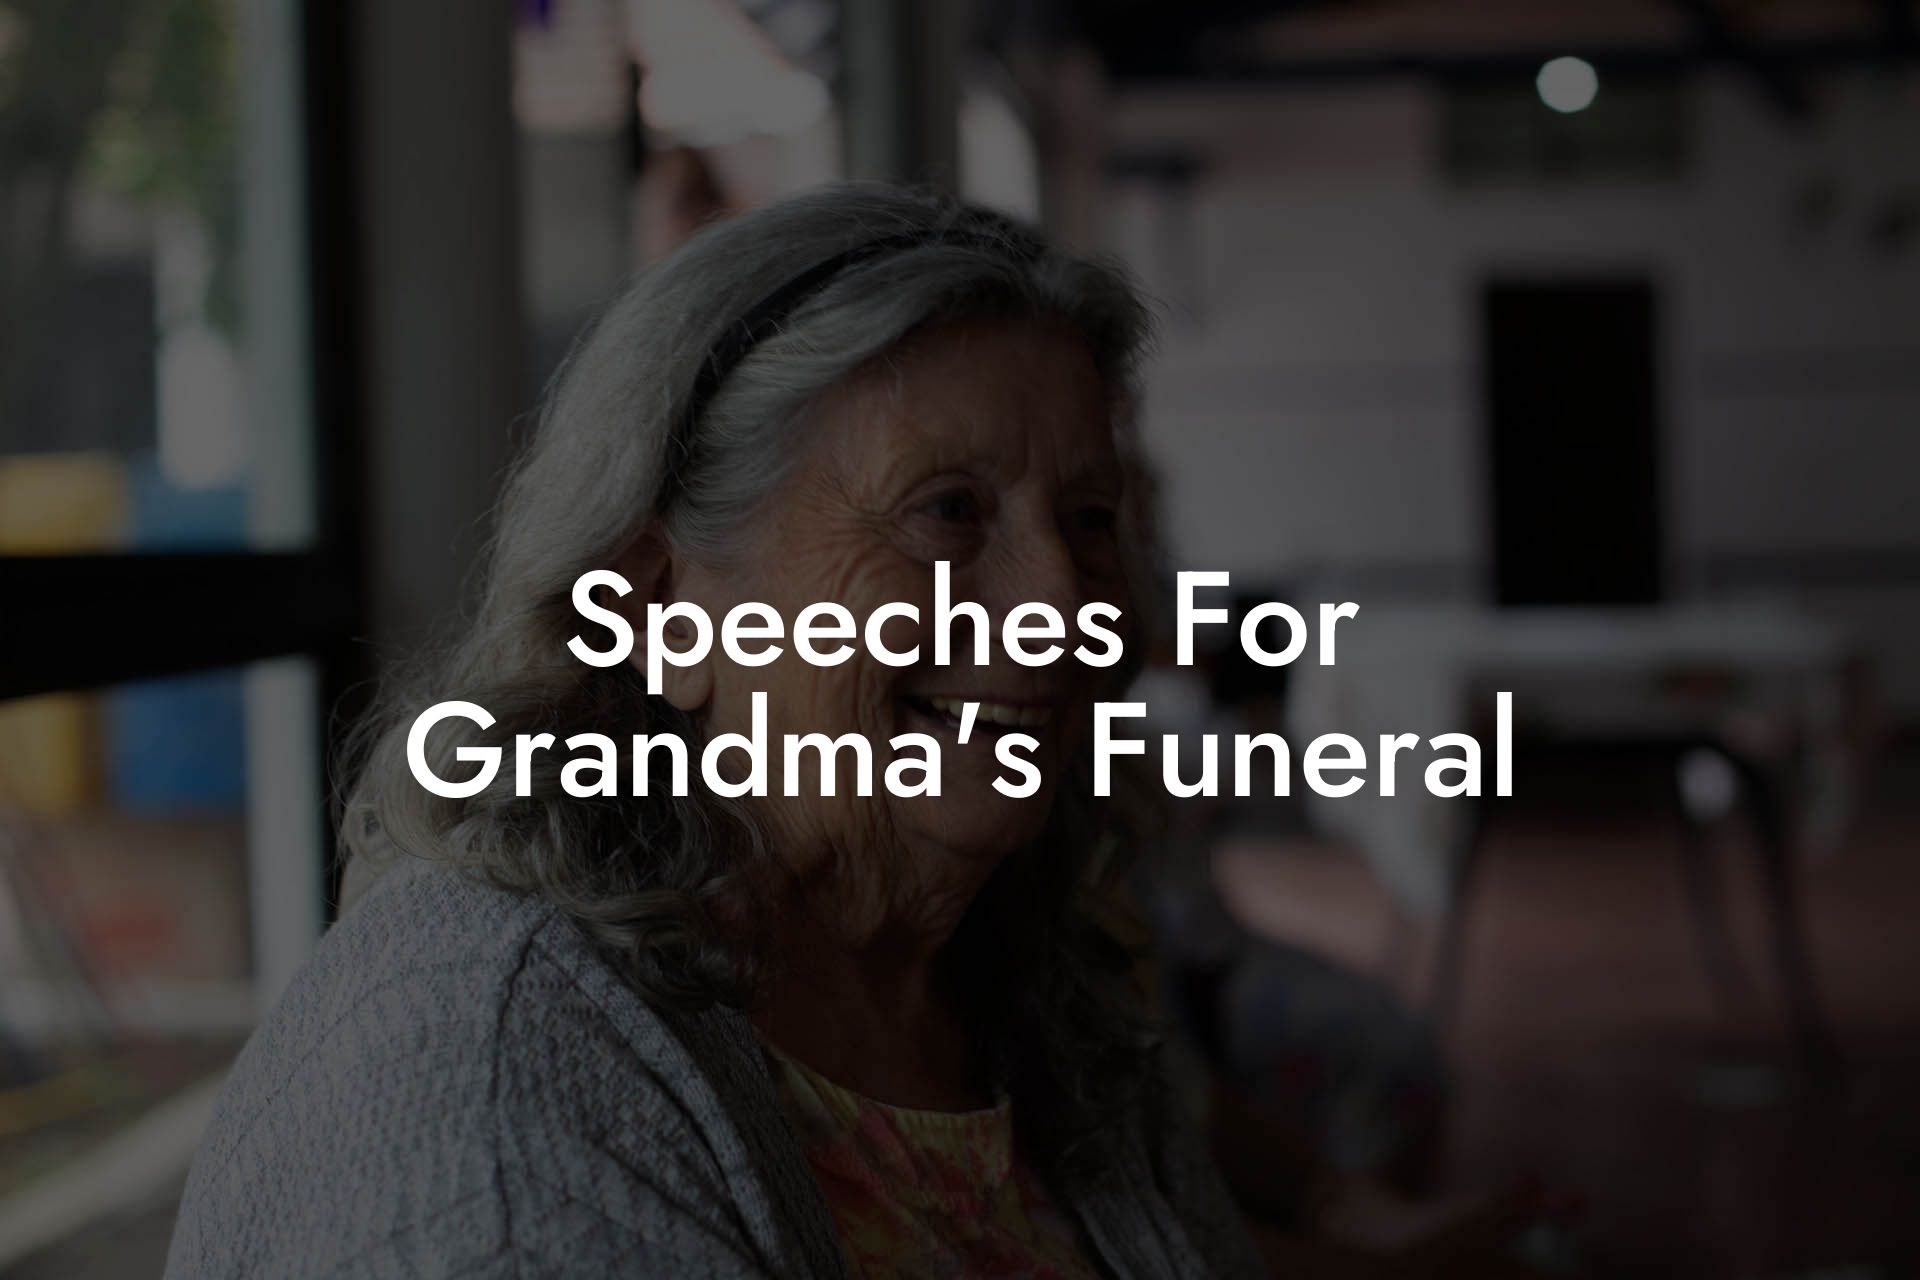 Speeches For Grandma's Funeral